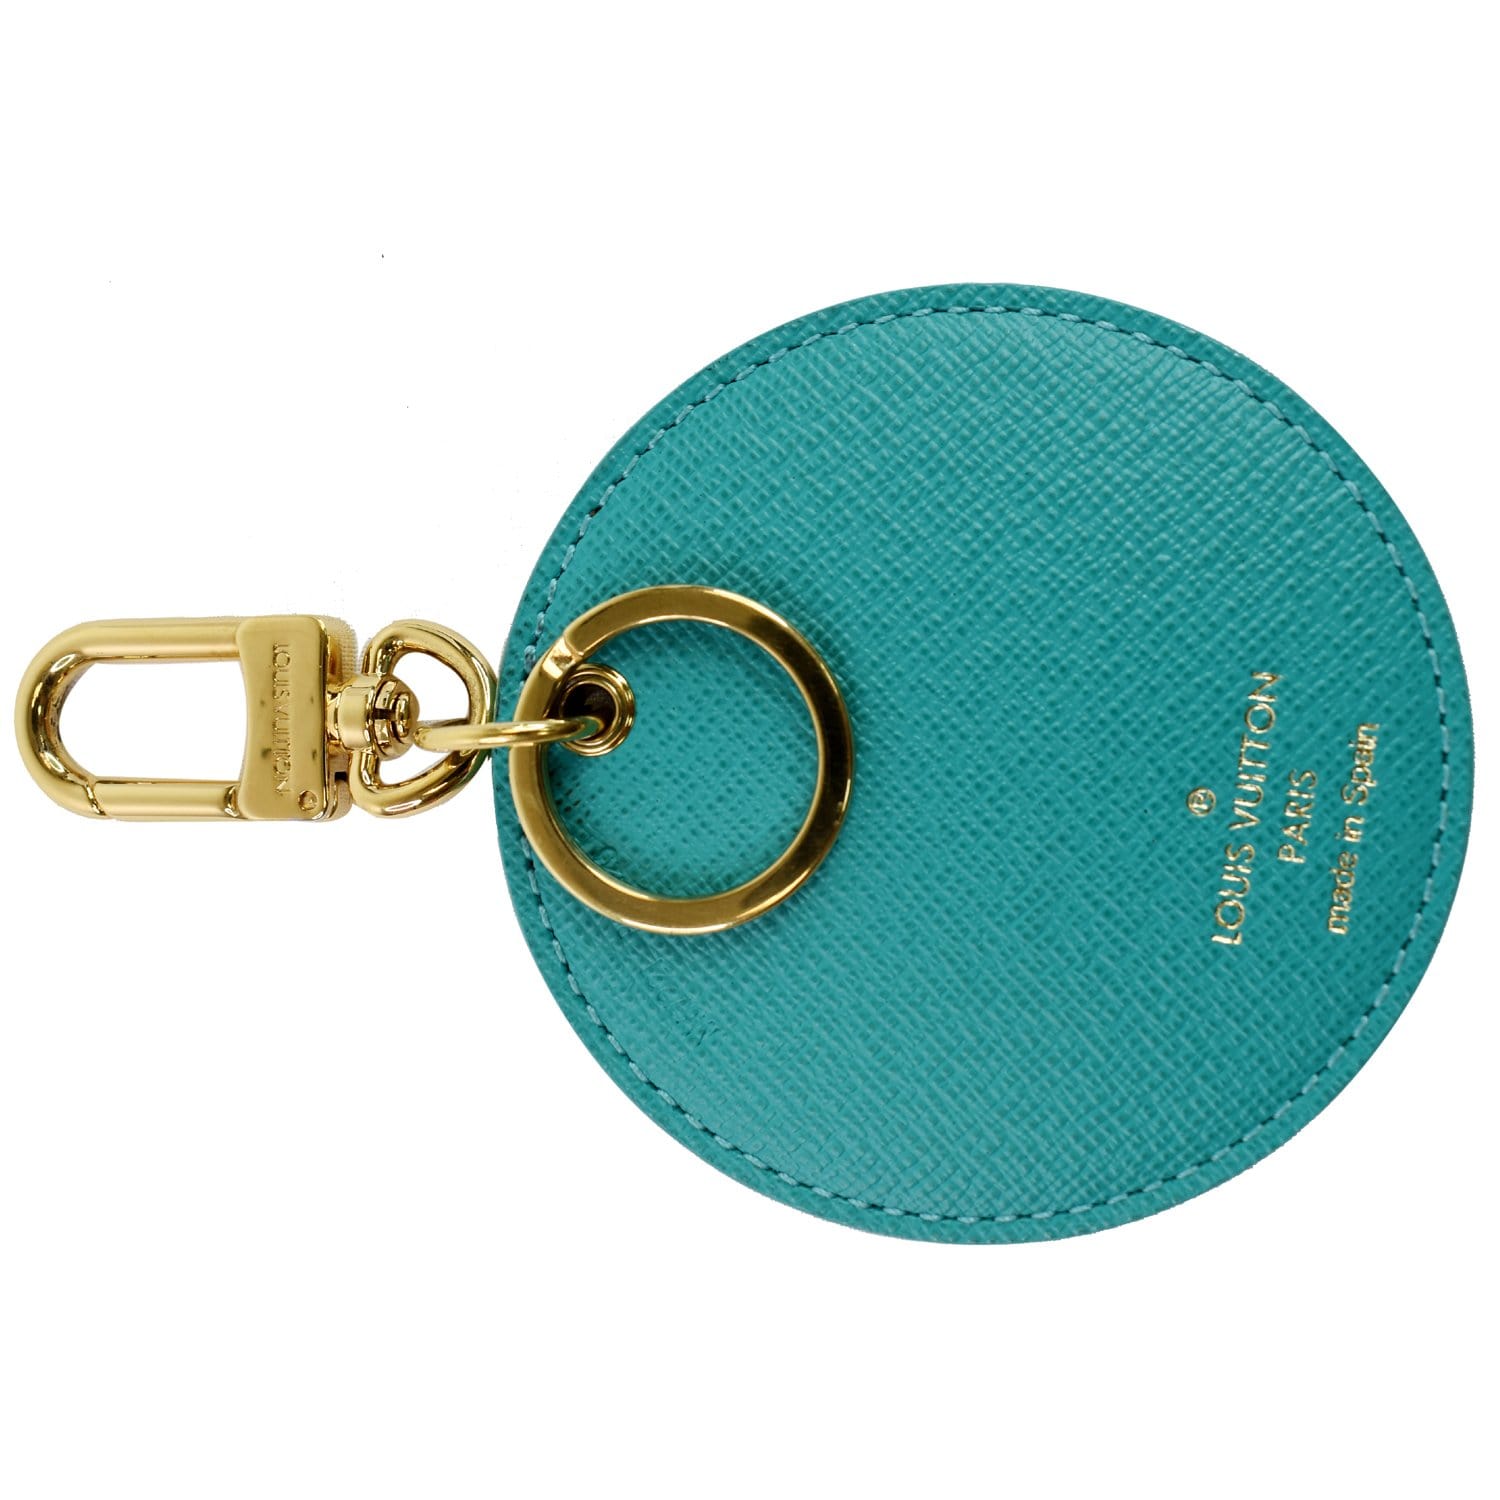 Louis Vuitton Circle Key Holder Bag Charm - SOLD